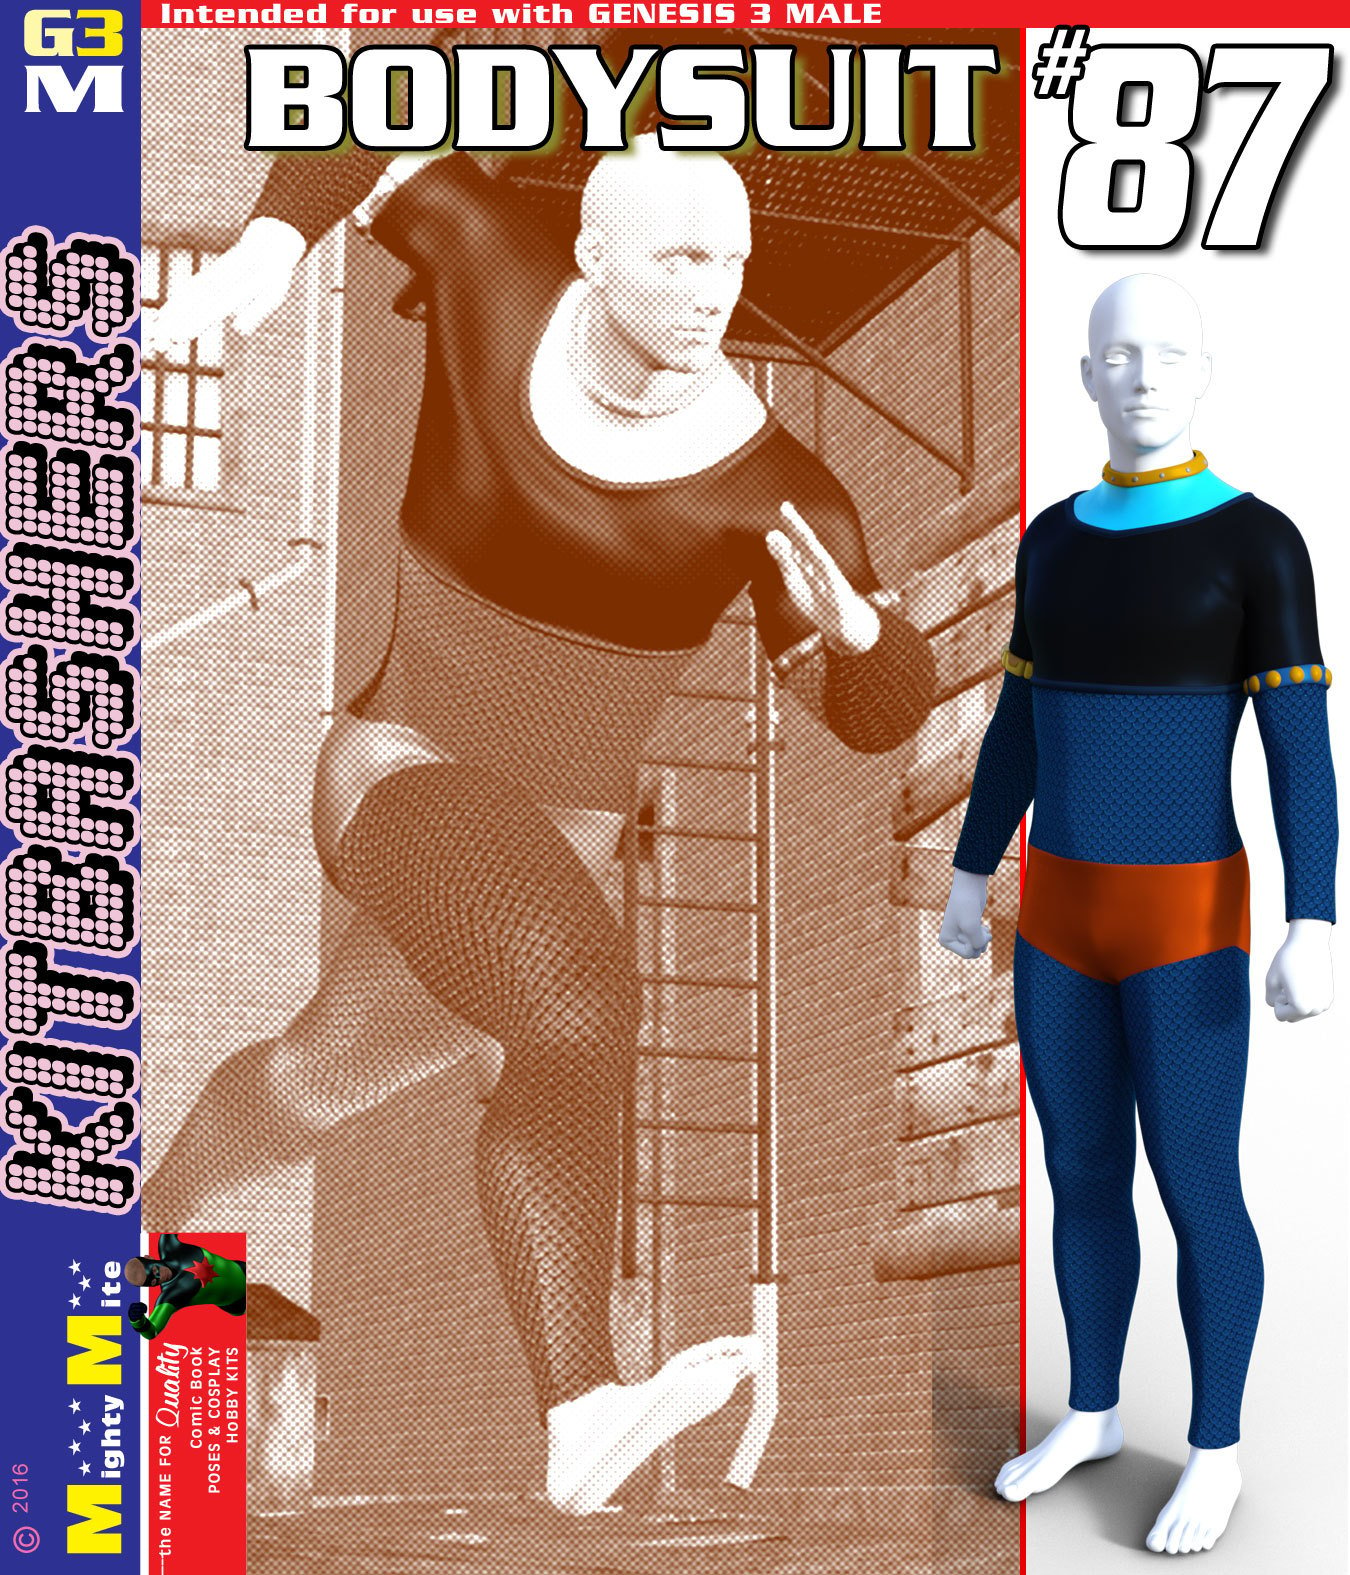 Bodysuit 087 MMKBG3M by: MightyMite, 3D Models by Daz 3D